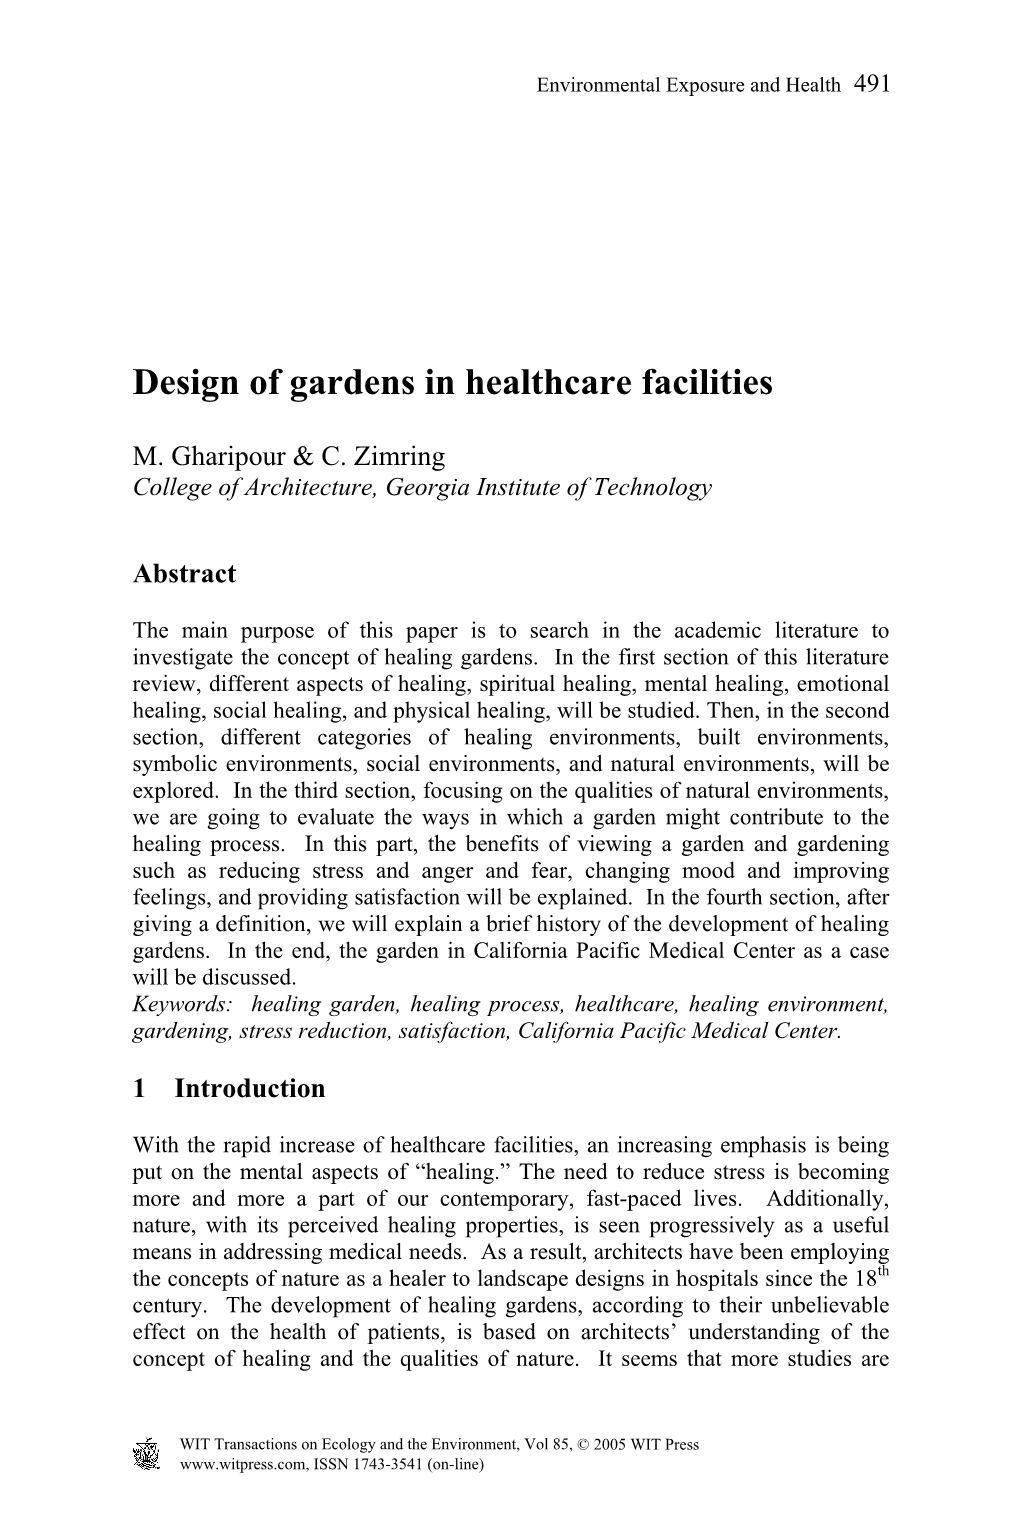 Design of Gardens in Healthcare Facilities